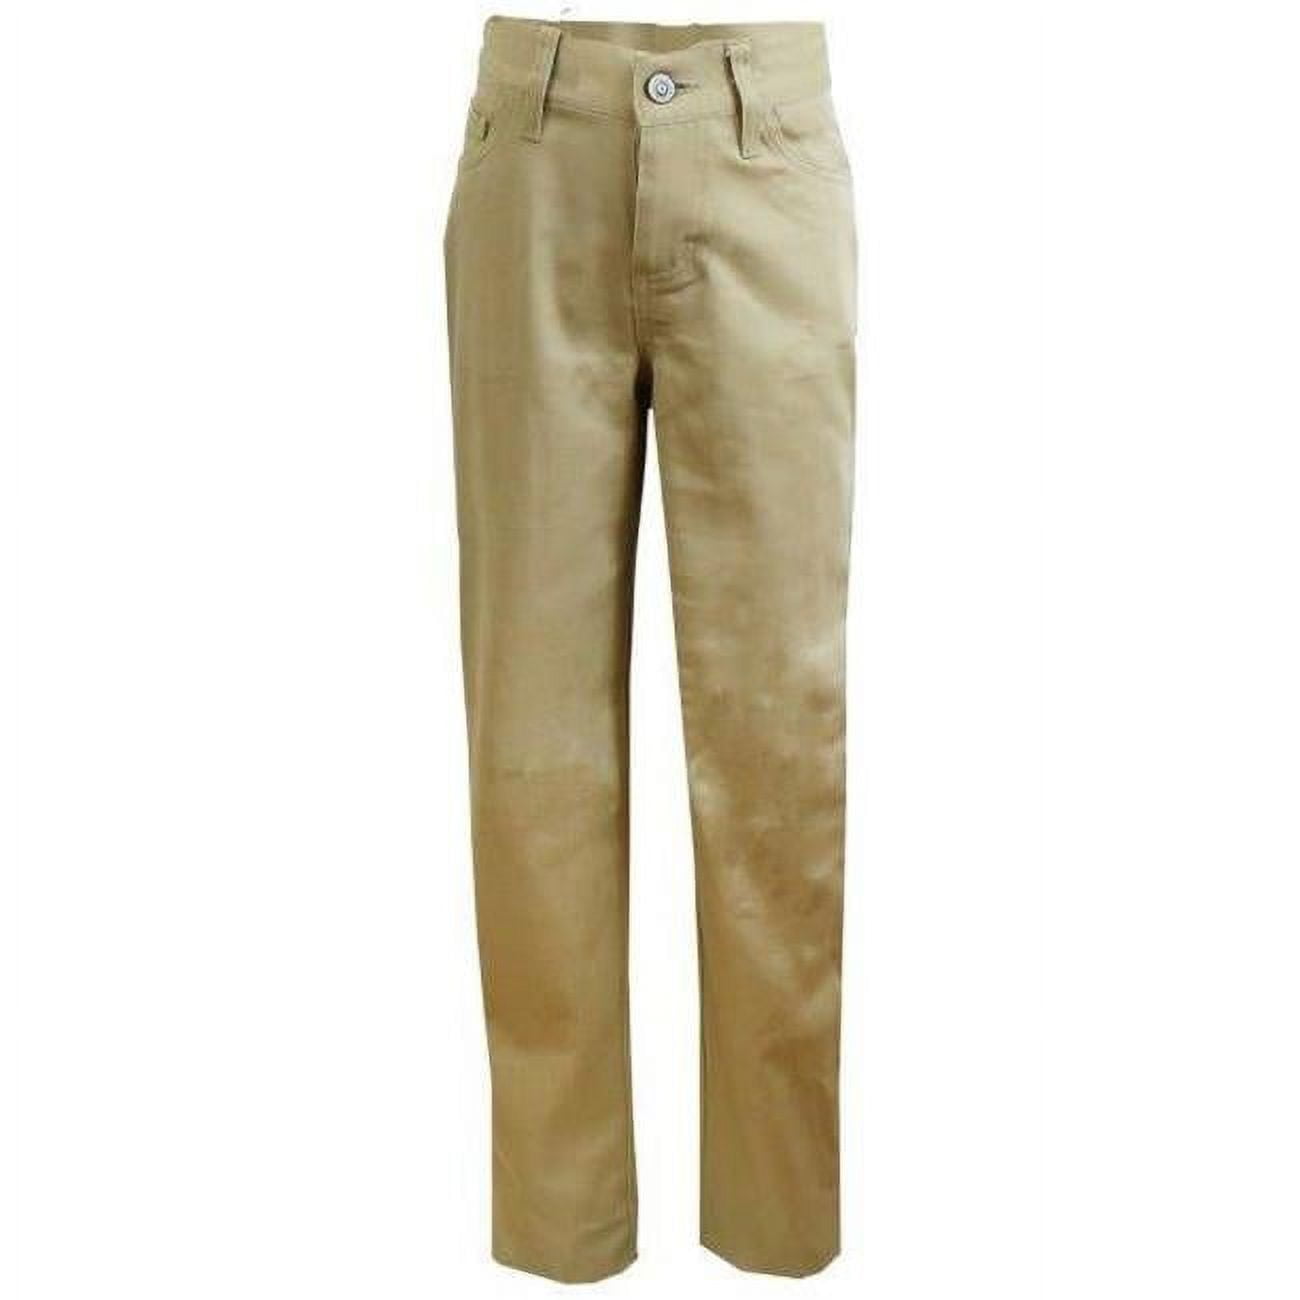 Picture of DDI 2270020 Juniors&apos; Khaki Fashion Stretch Skinny Pants - Size 7/8 Case of 24